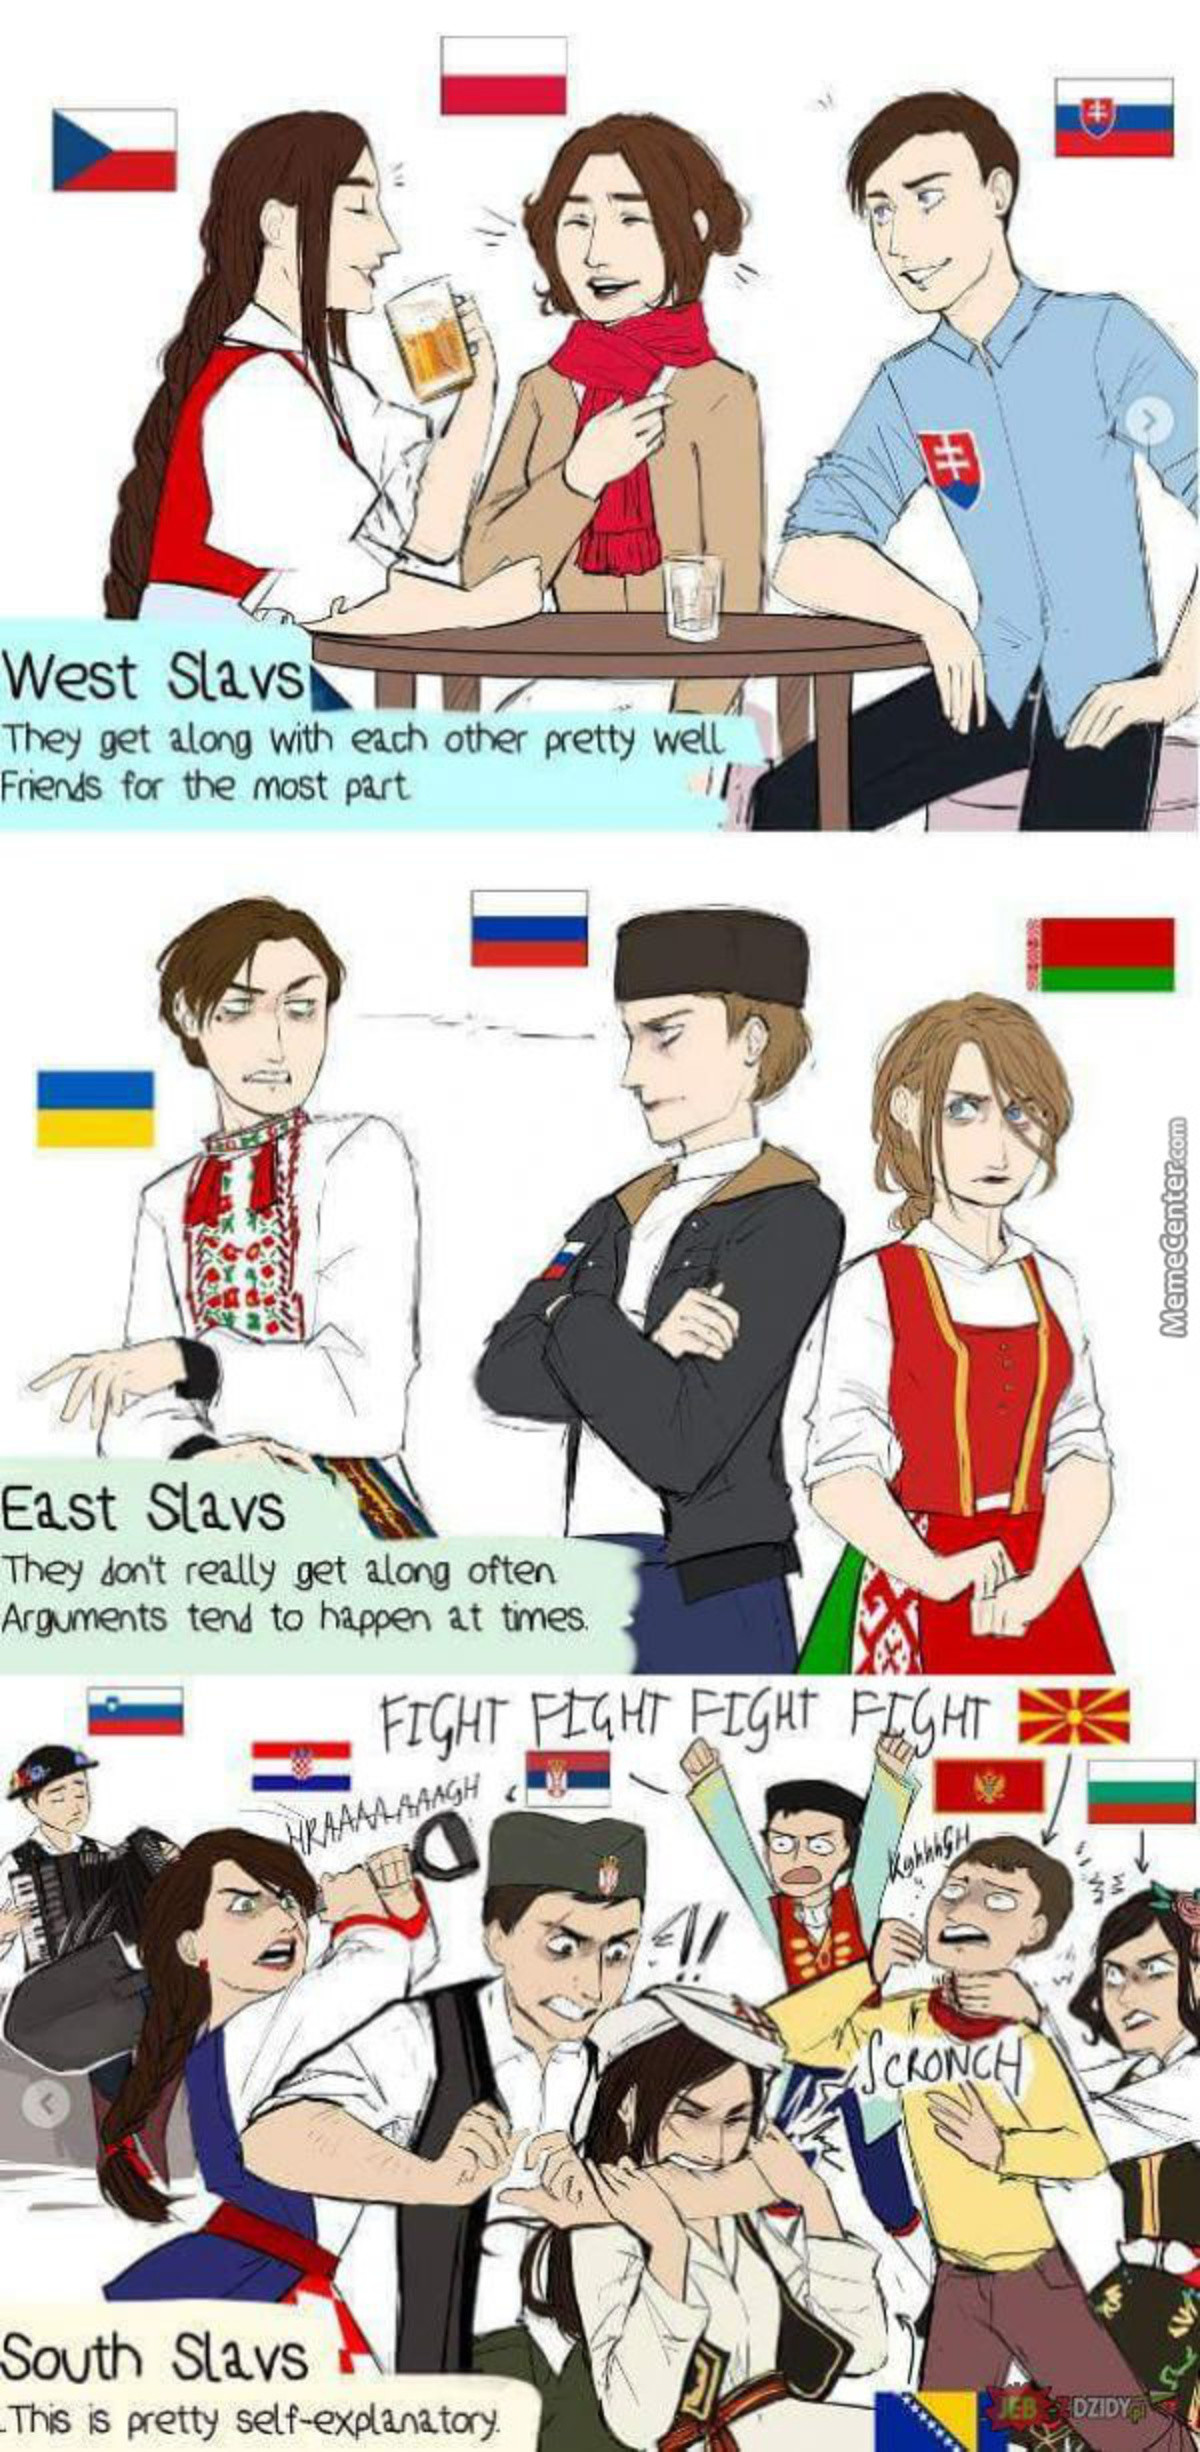 Western Slavs vs Eastern Slavs vs Southern Slavs. Western Slavs (Czechs/Slovaks , and the Po